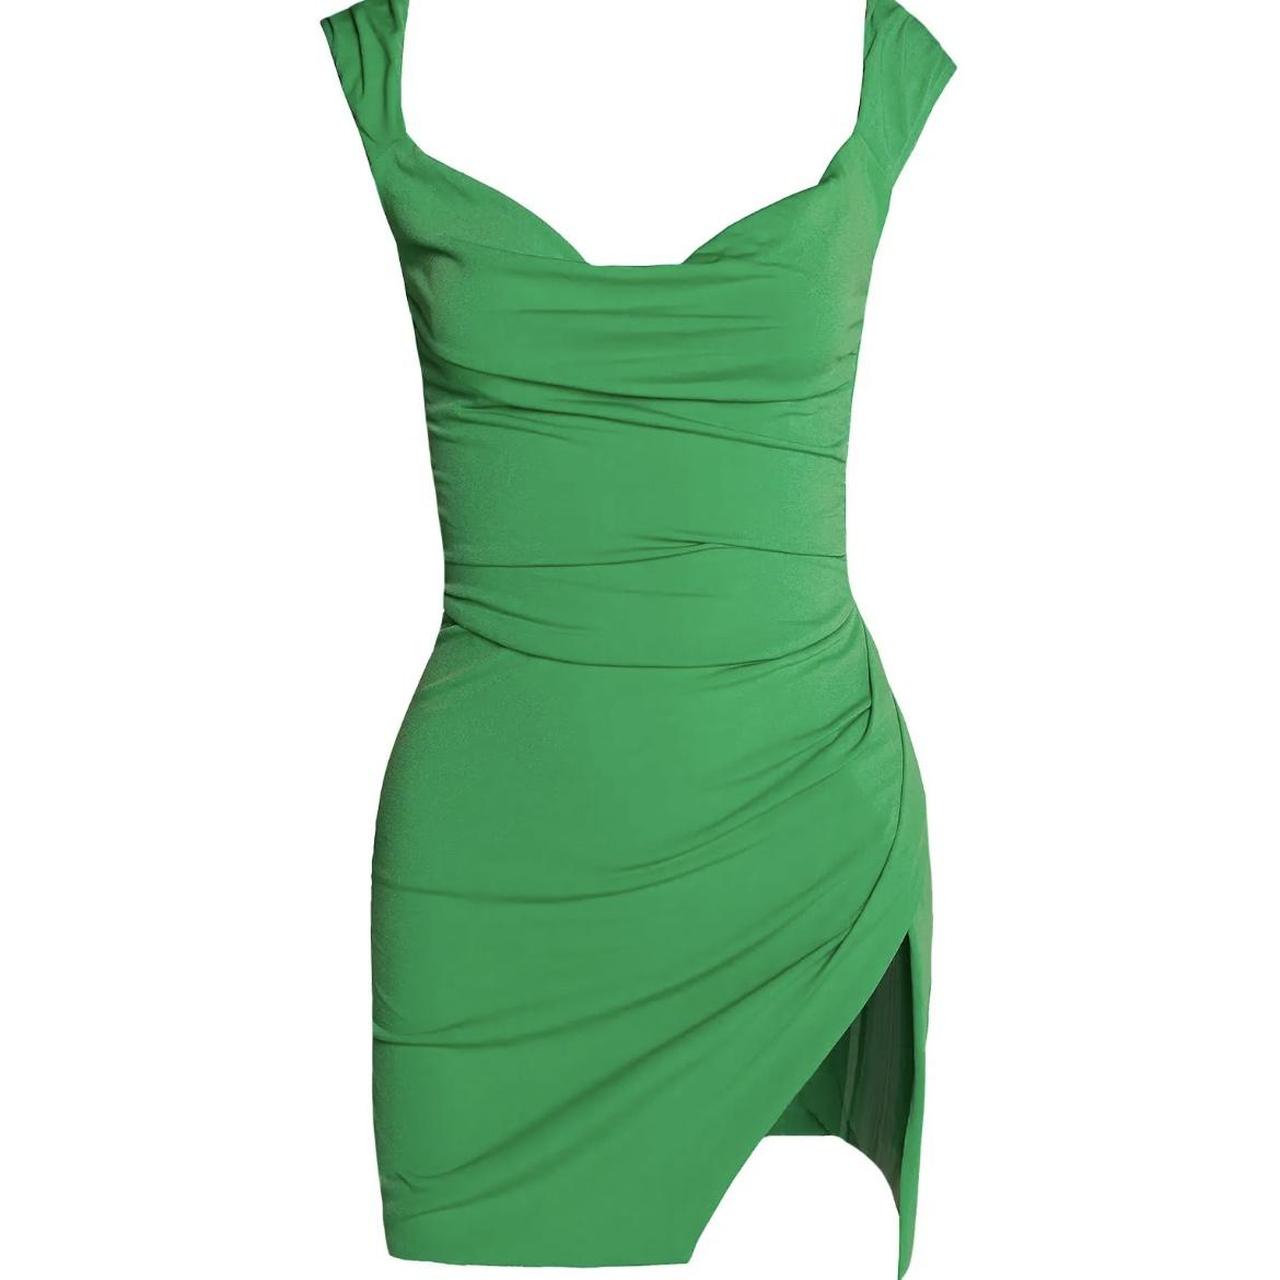 Green backless minidress. Super flattering and only... - Depop